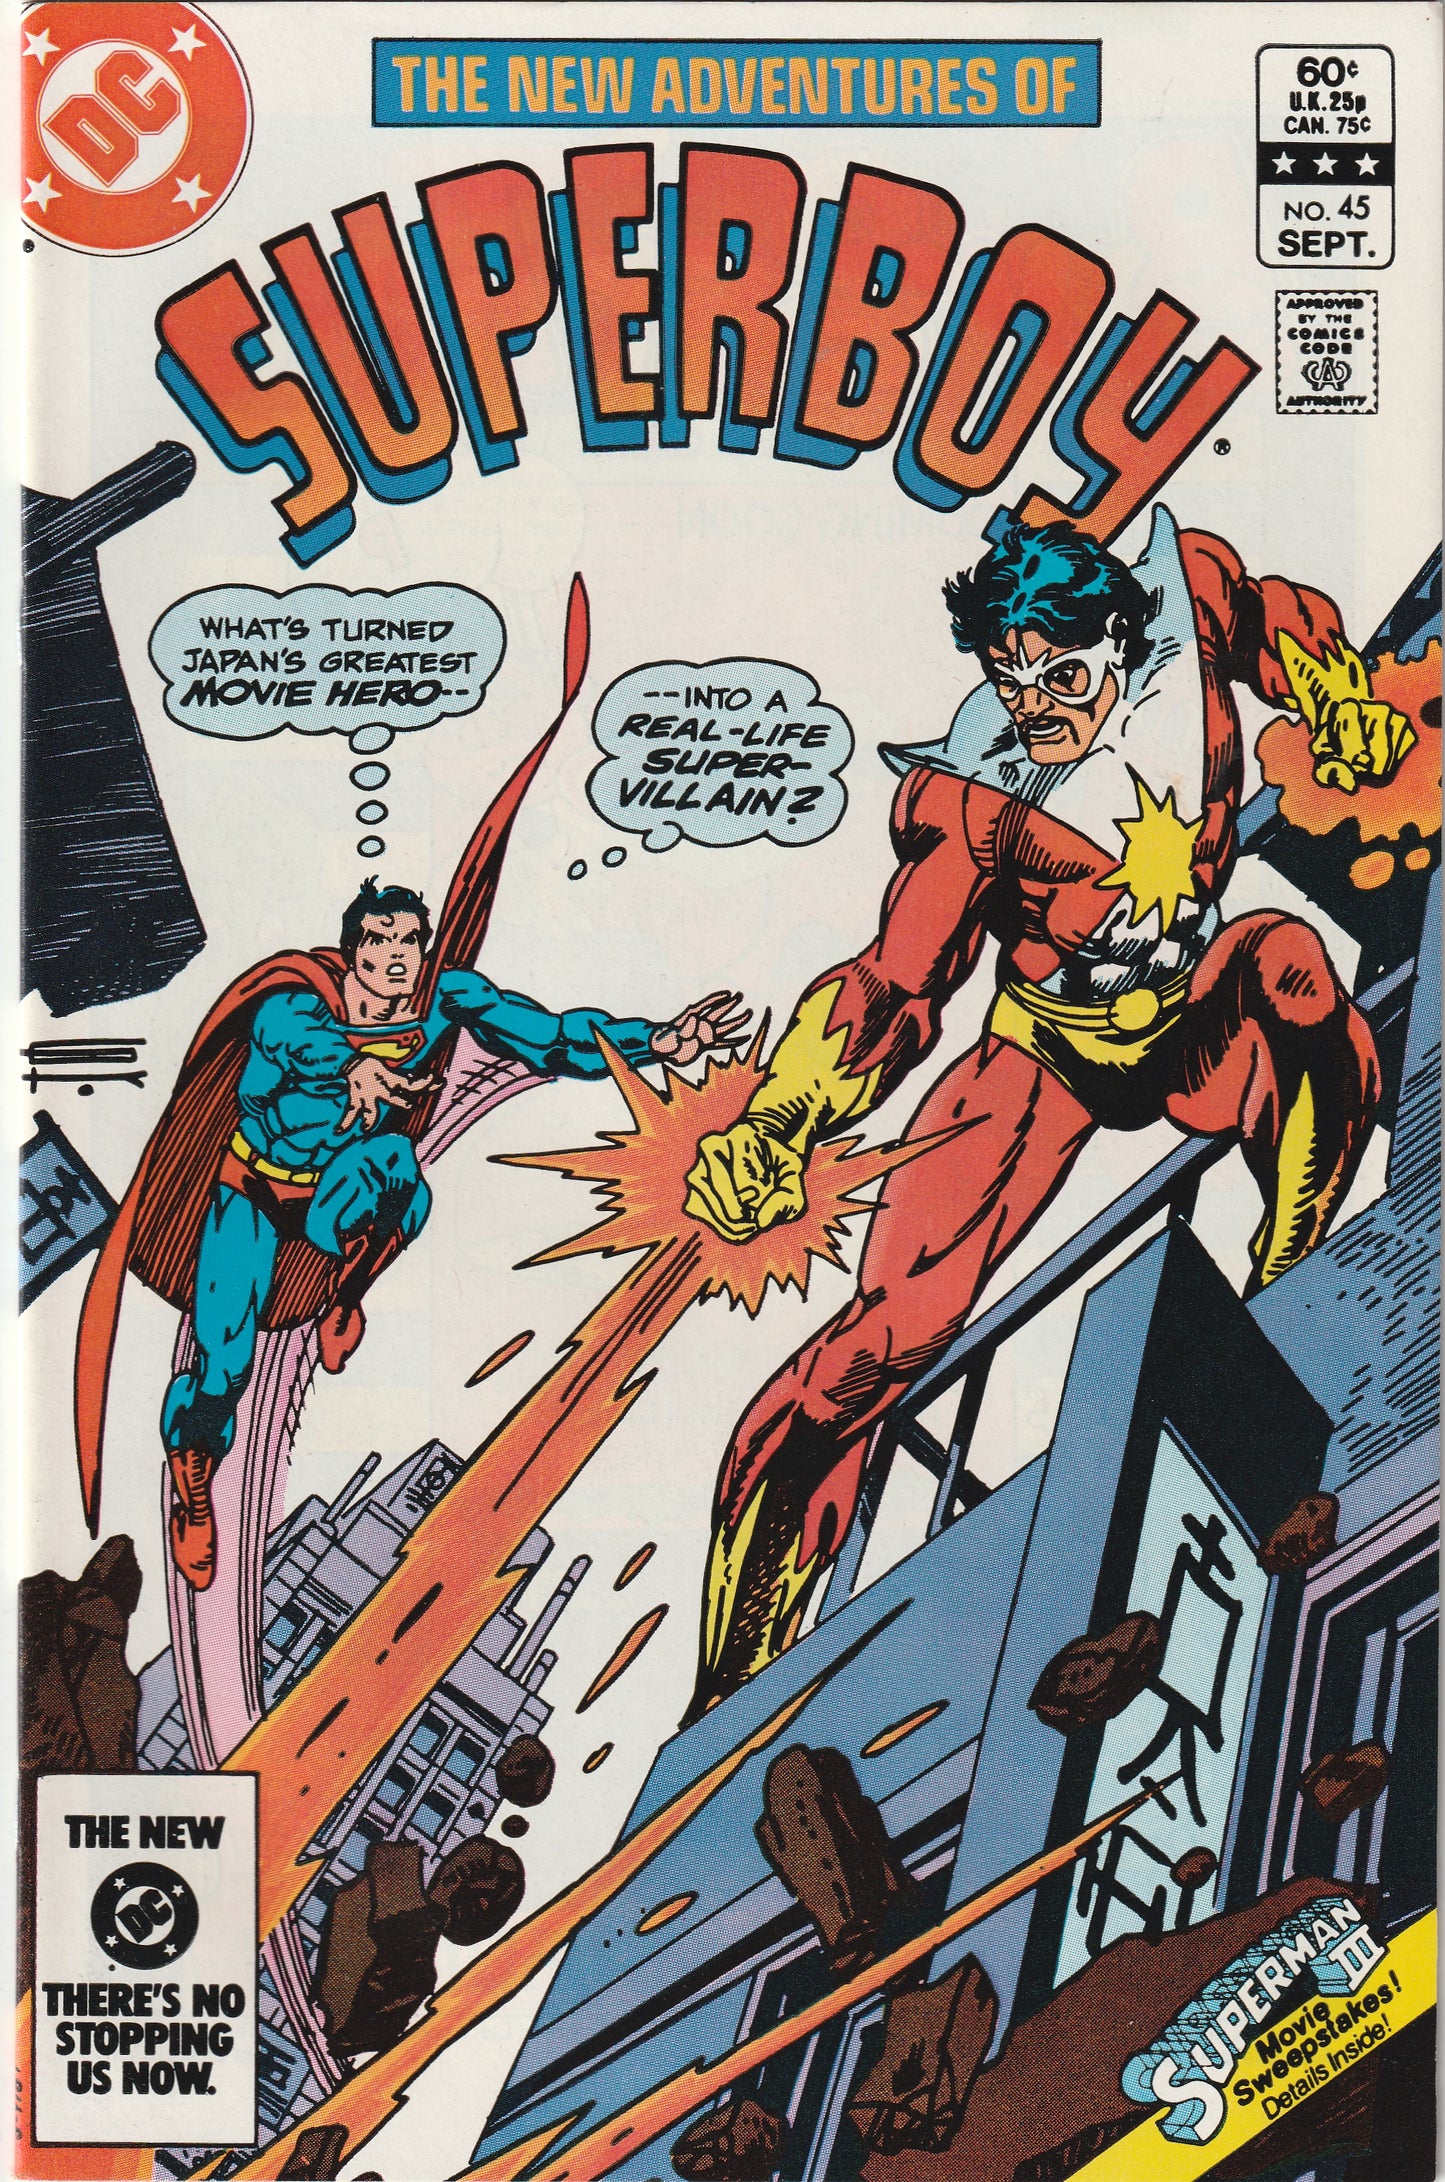 New Adventures of Superboy #45 (1983)